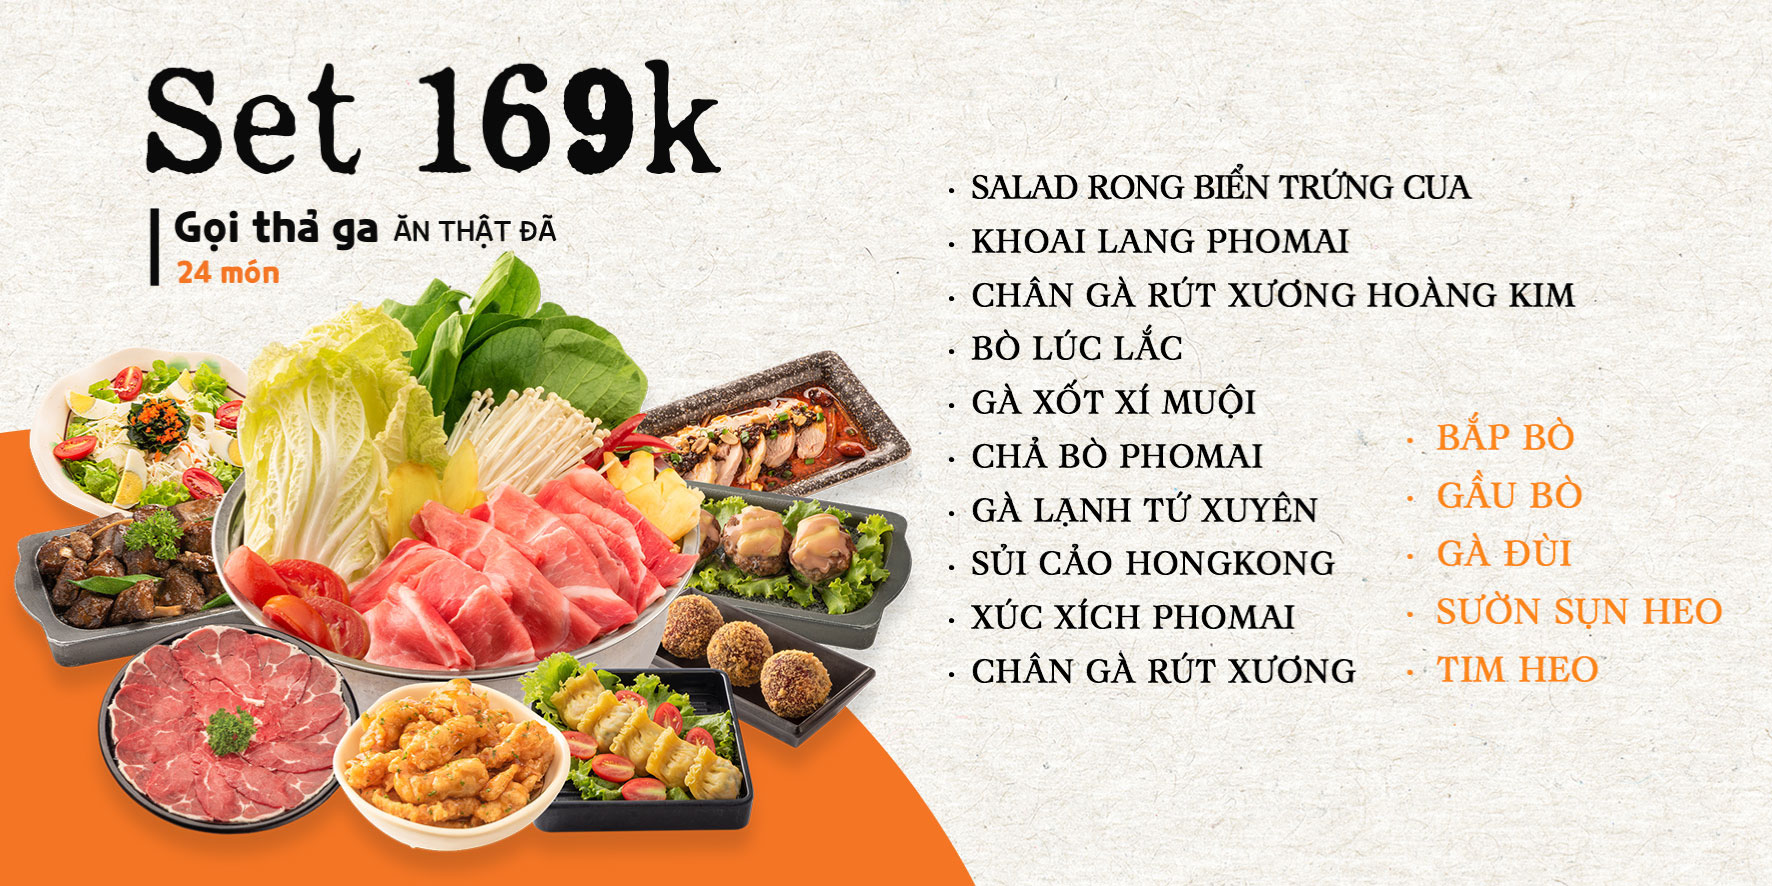 lau phan thuong dinh menu set 169k